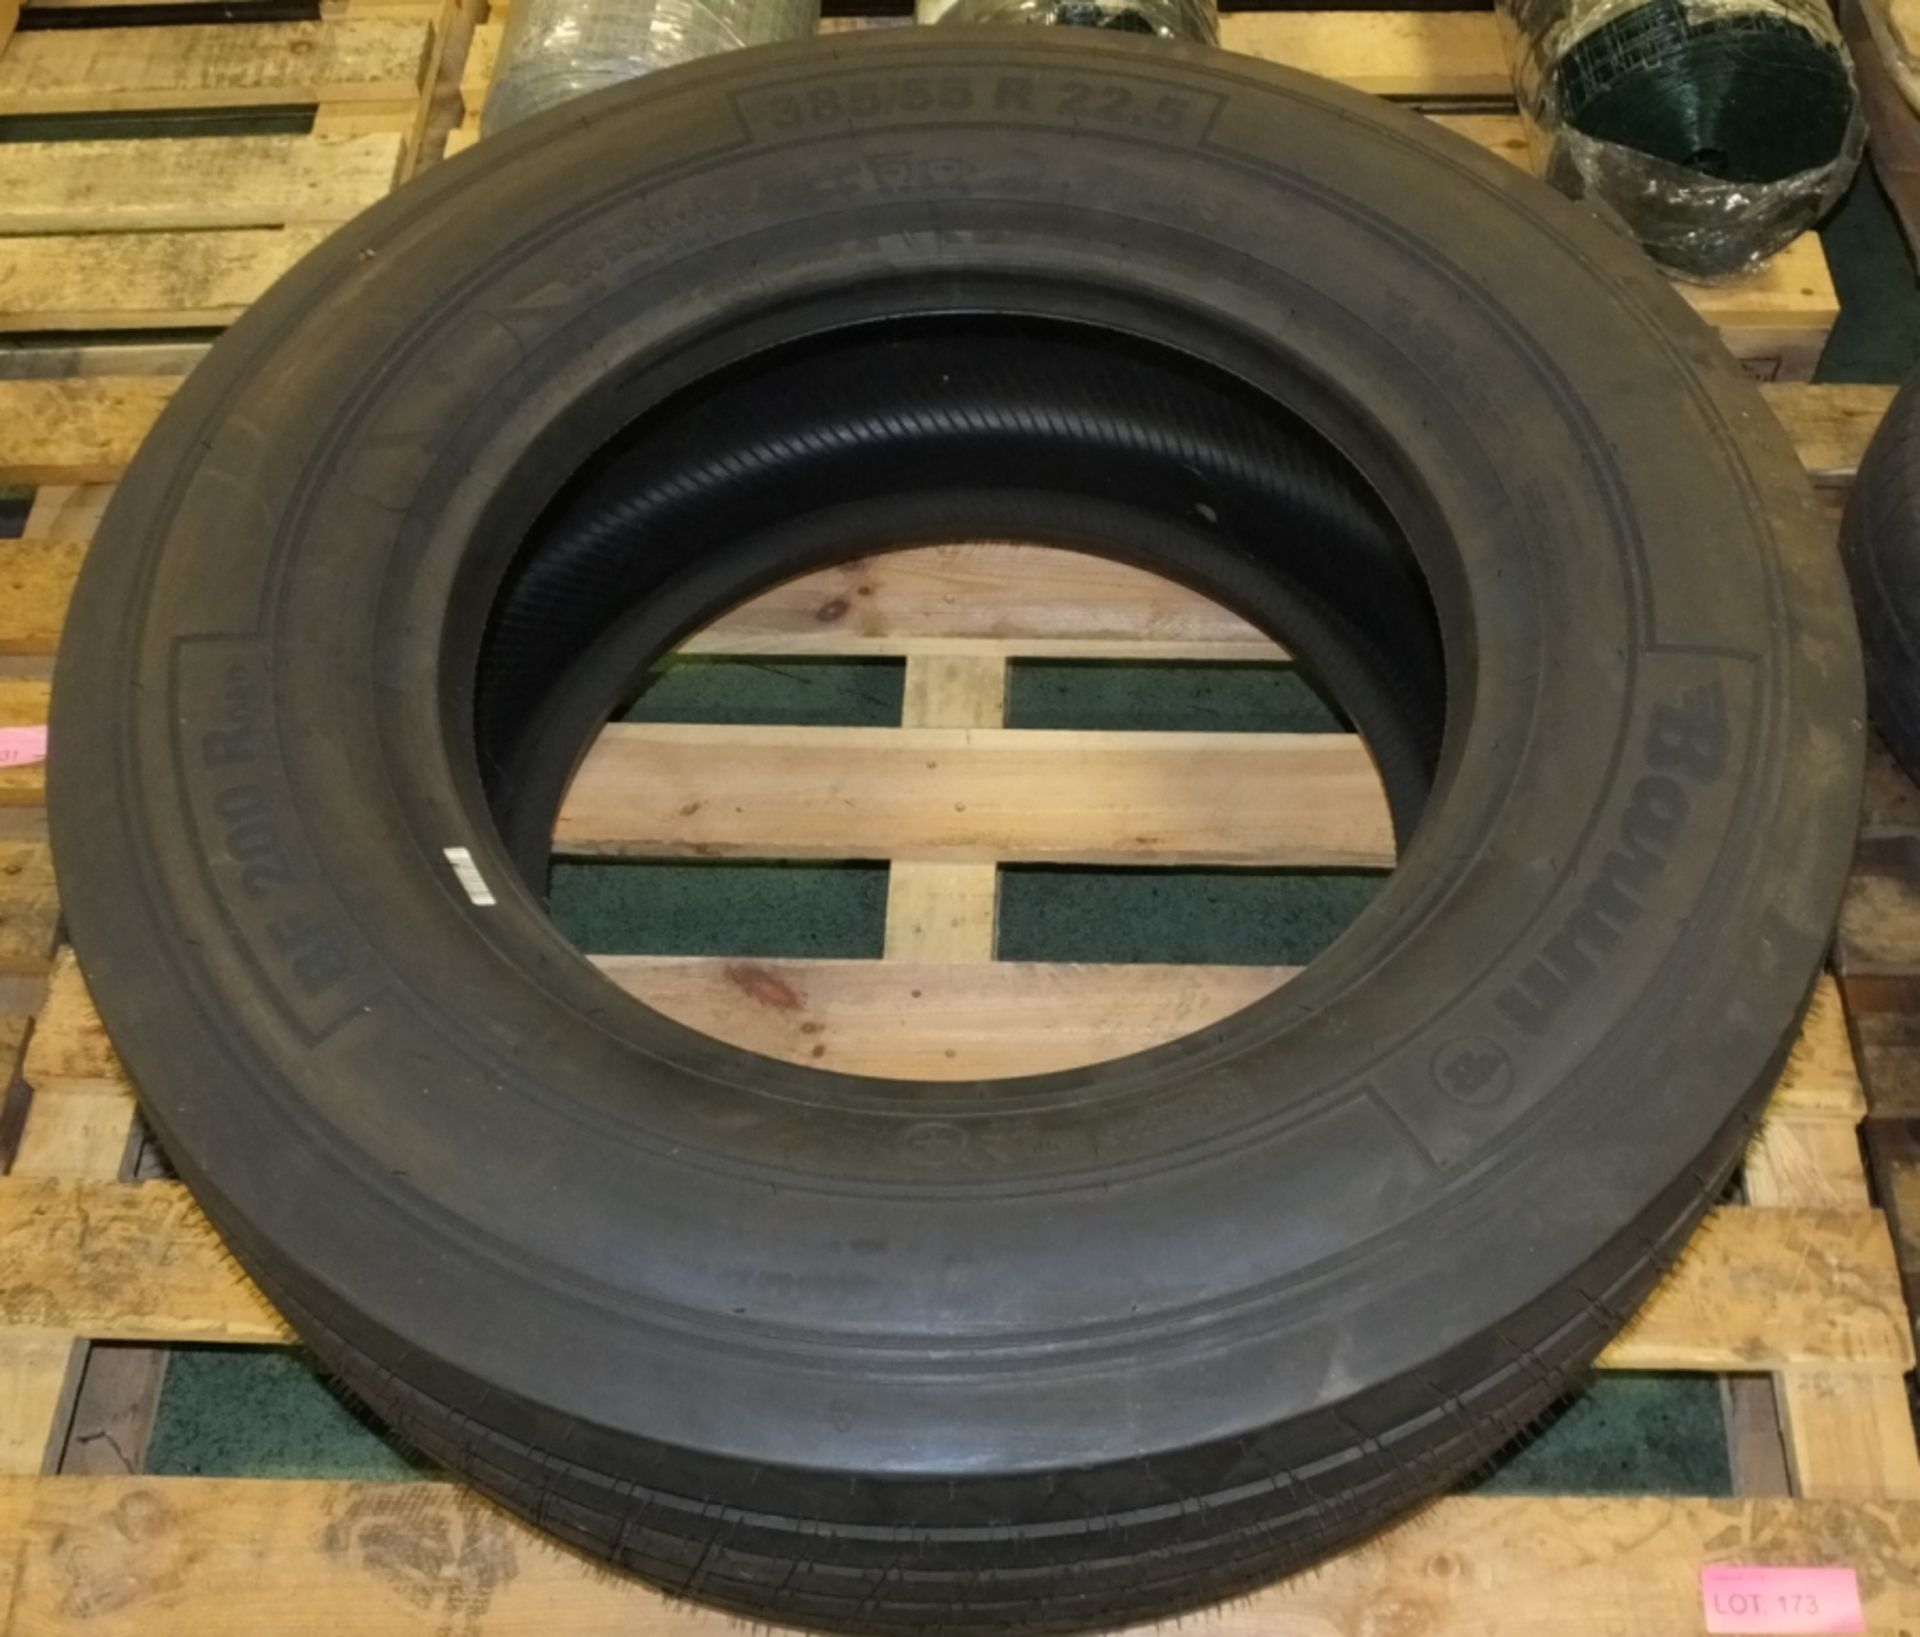 Barum BF 200 Road tire - 385/55 R 22.5 (new & unused)